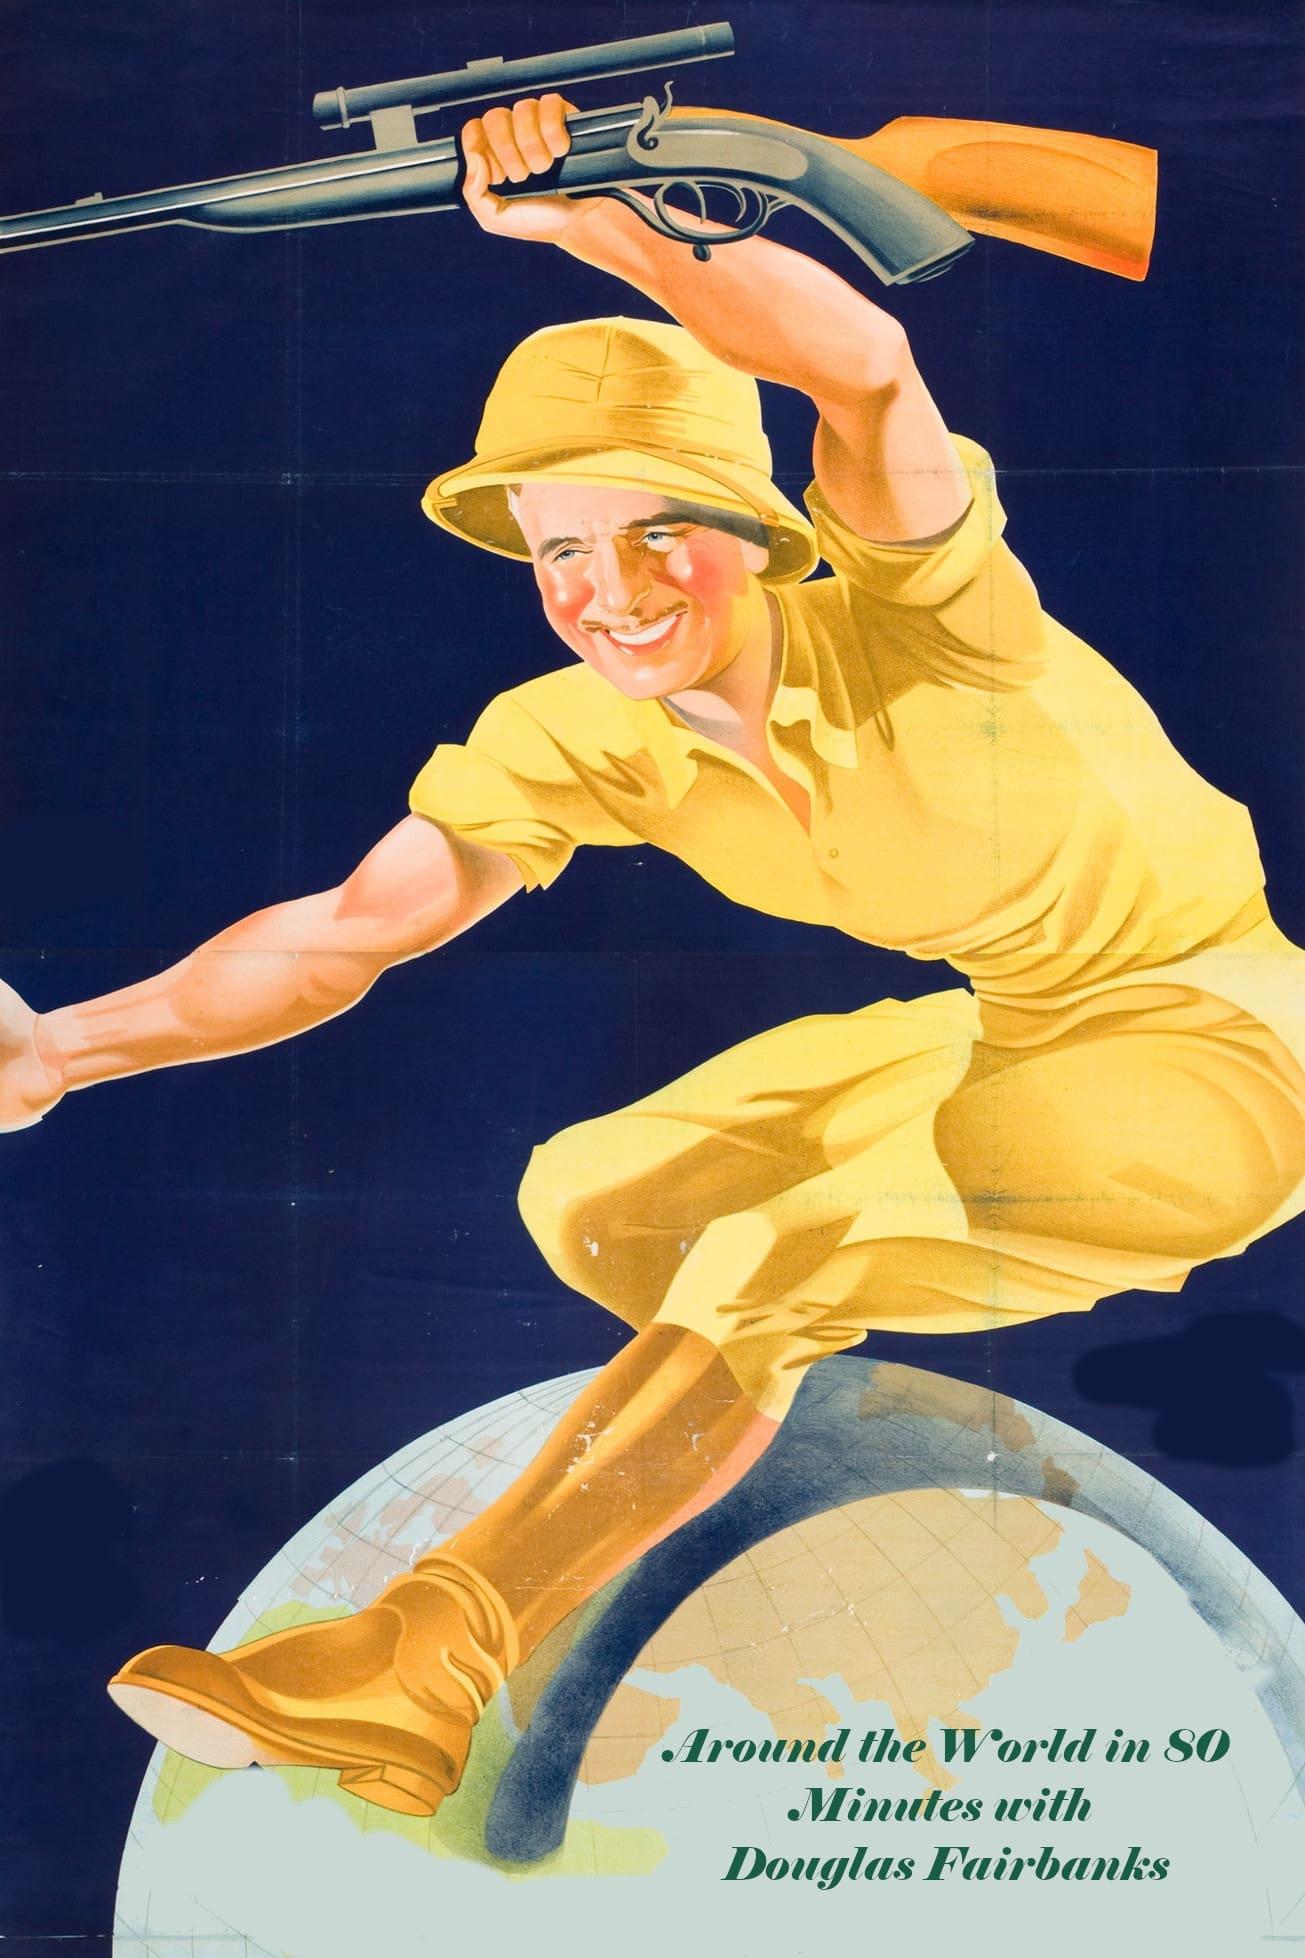 Around the World with Douglas Fairbanks poster